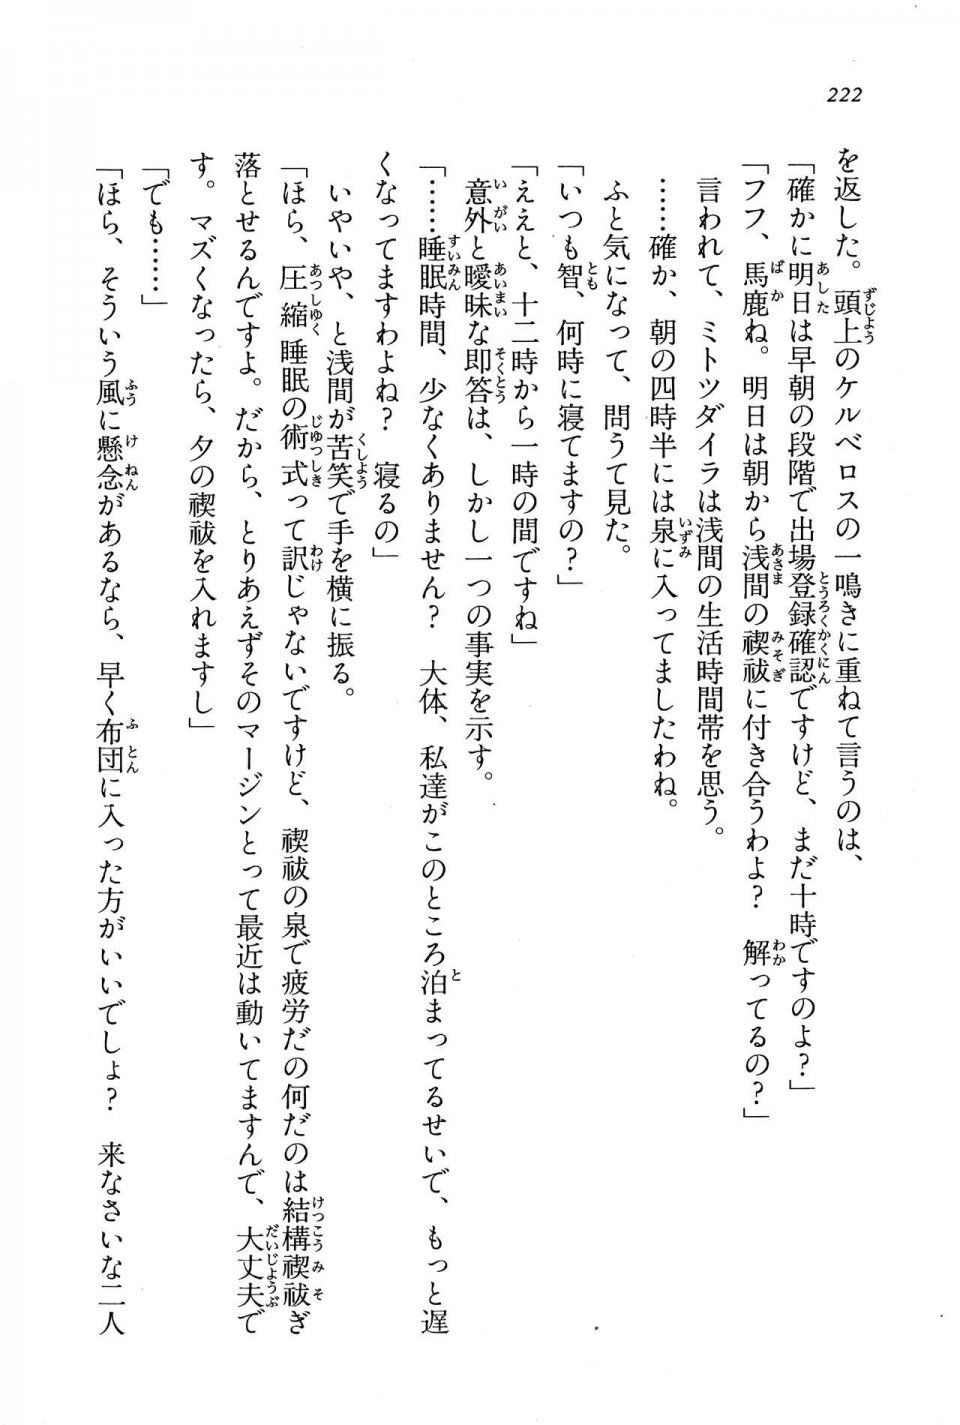 Kyoukai Senjou no Horizon BD Special Mininovel Vol 8(4B) - Photo #226